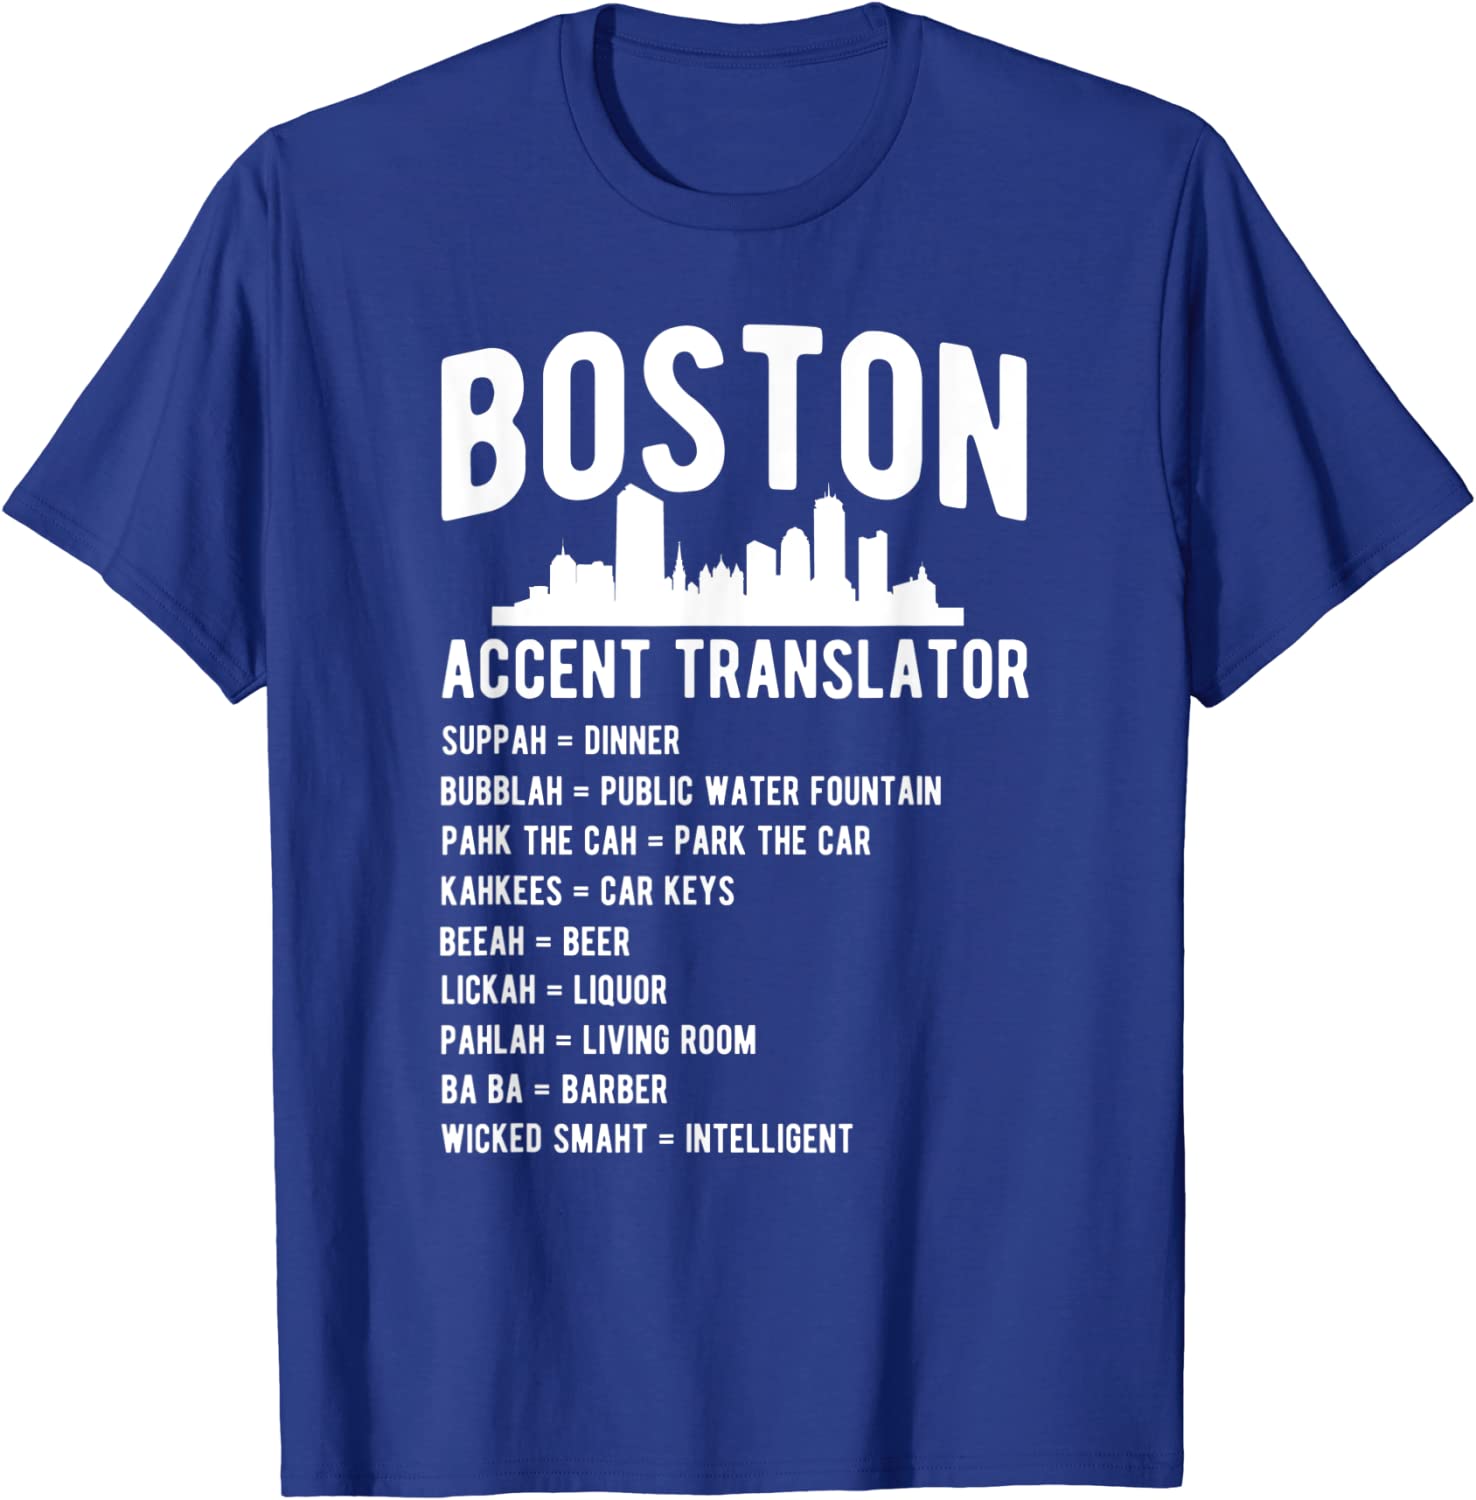 Boston accent translator t-shirt